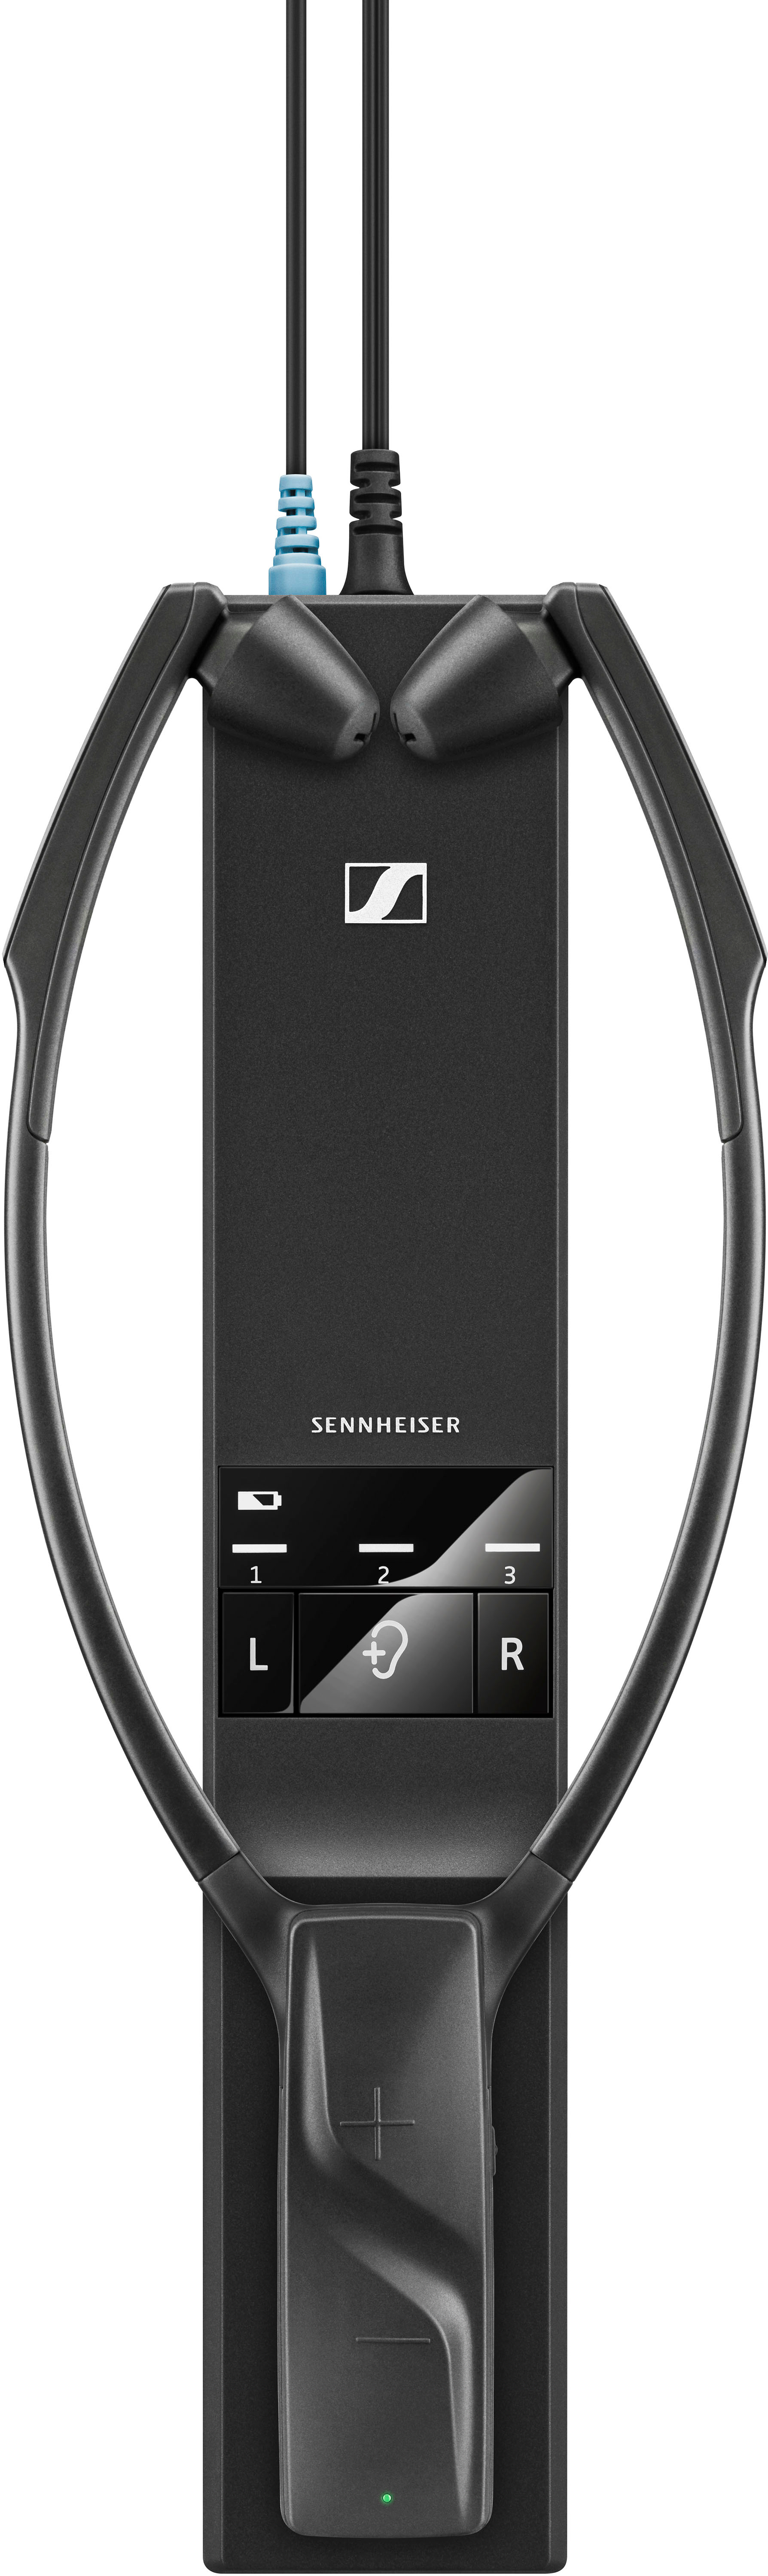 Sennheiser RS 2000 Digital Wireless TV Headphones - Black